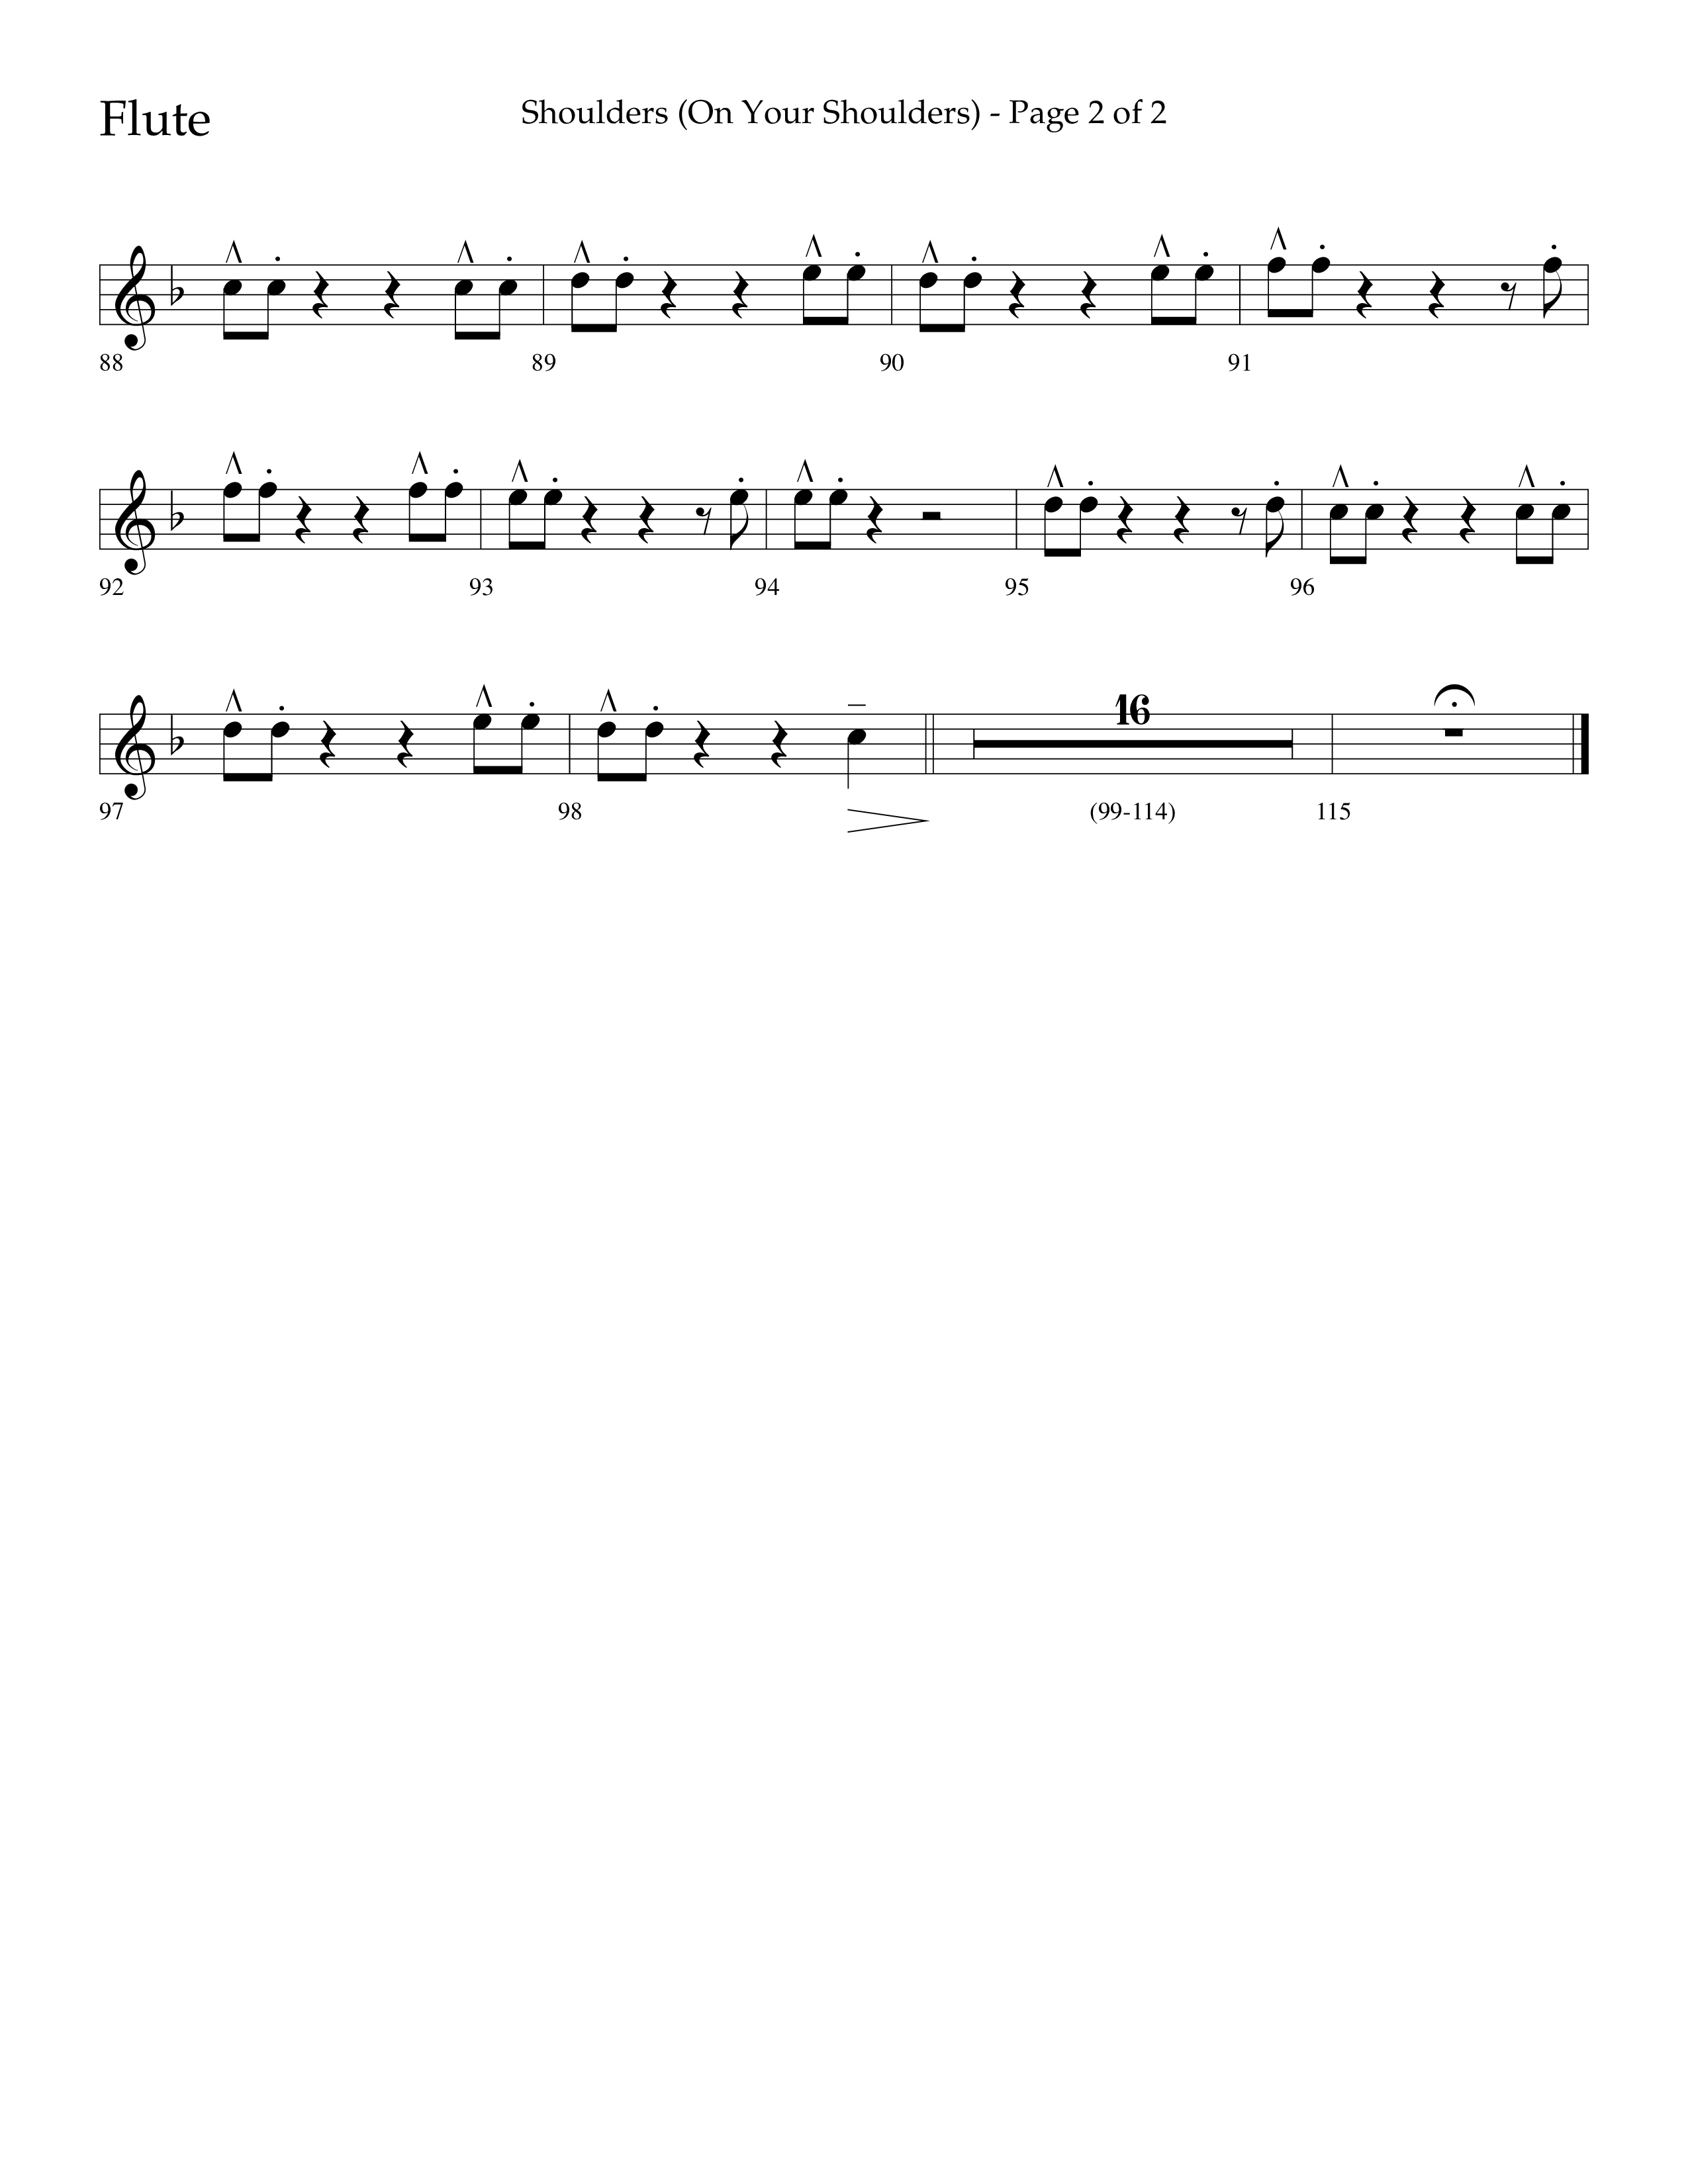 Shoulders (Choral Anthem SATB) Flute (Lifeway Choral / Arr. Cliff Duren)